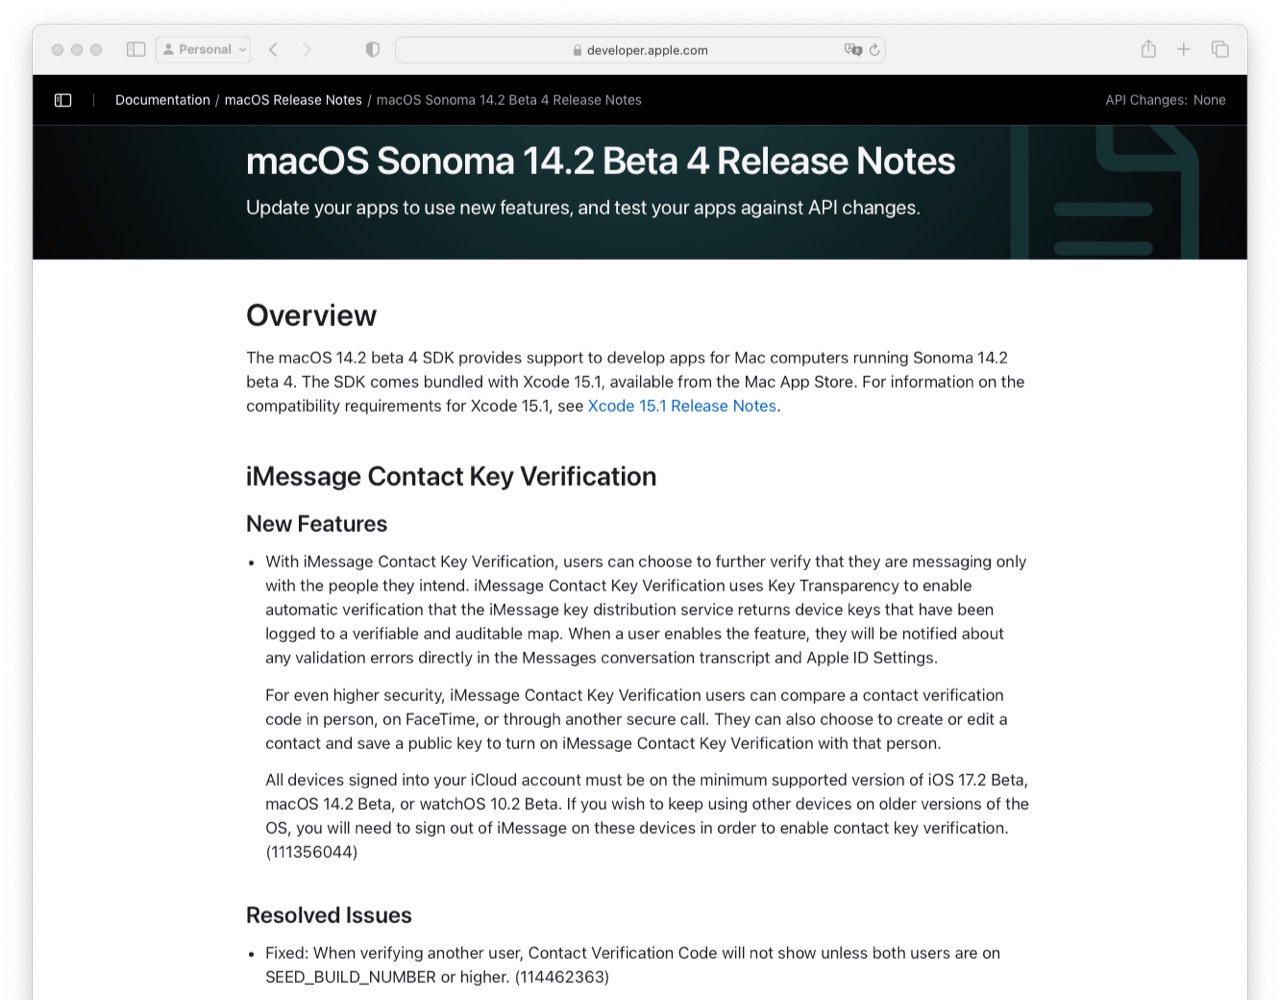 macOS Sonoma 14.2 Beta 4 Release Notes update